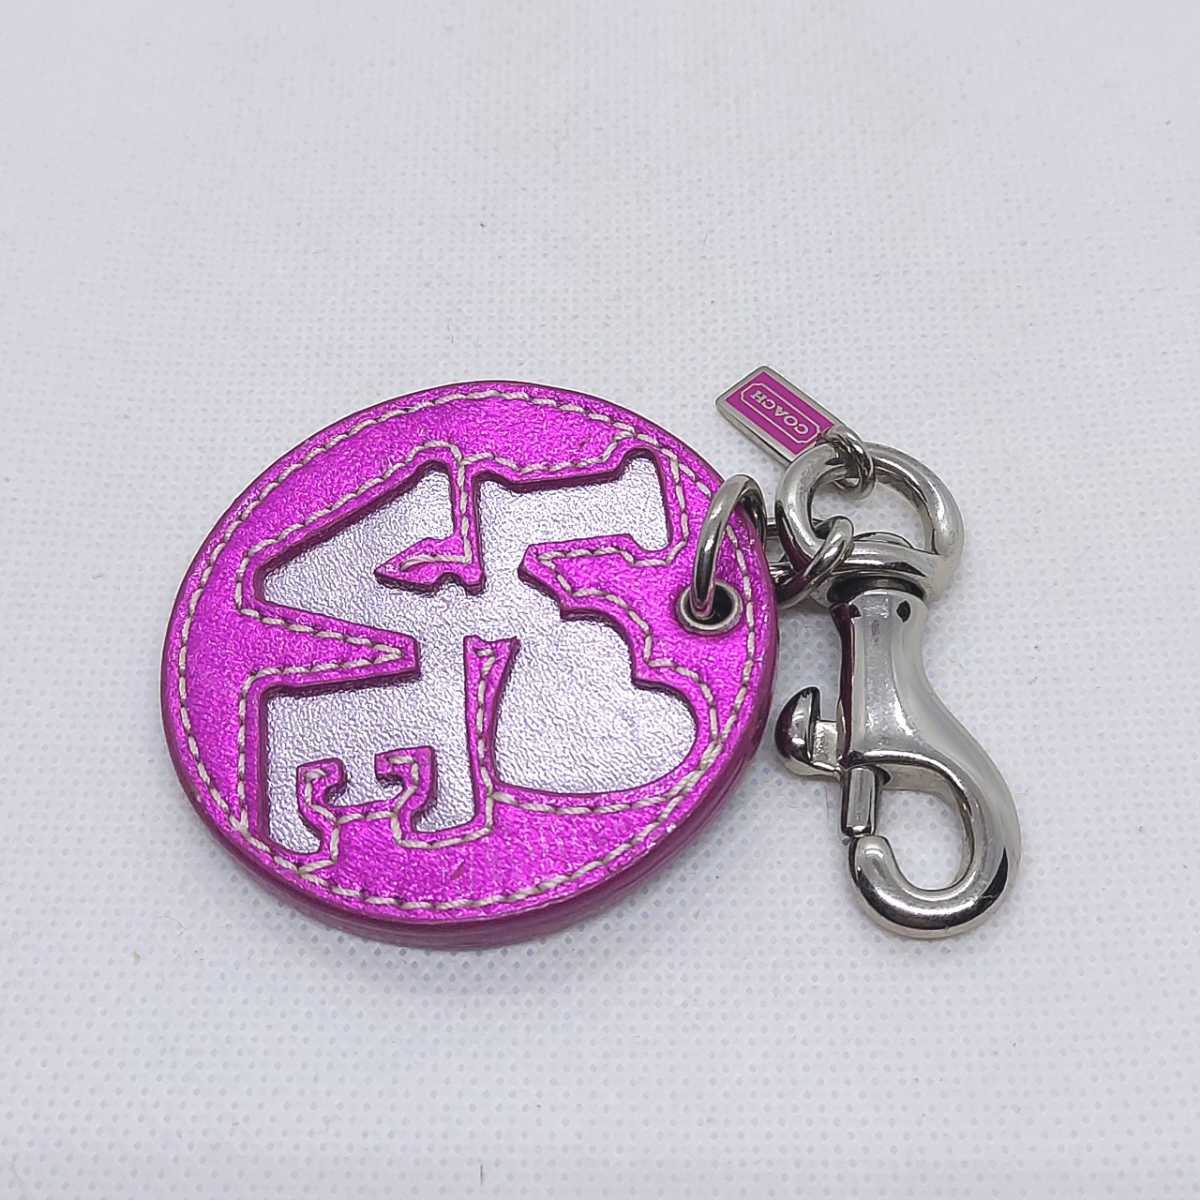  Coach COACH LOVE motif charm bag charm key holder 